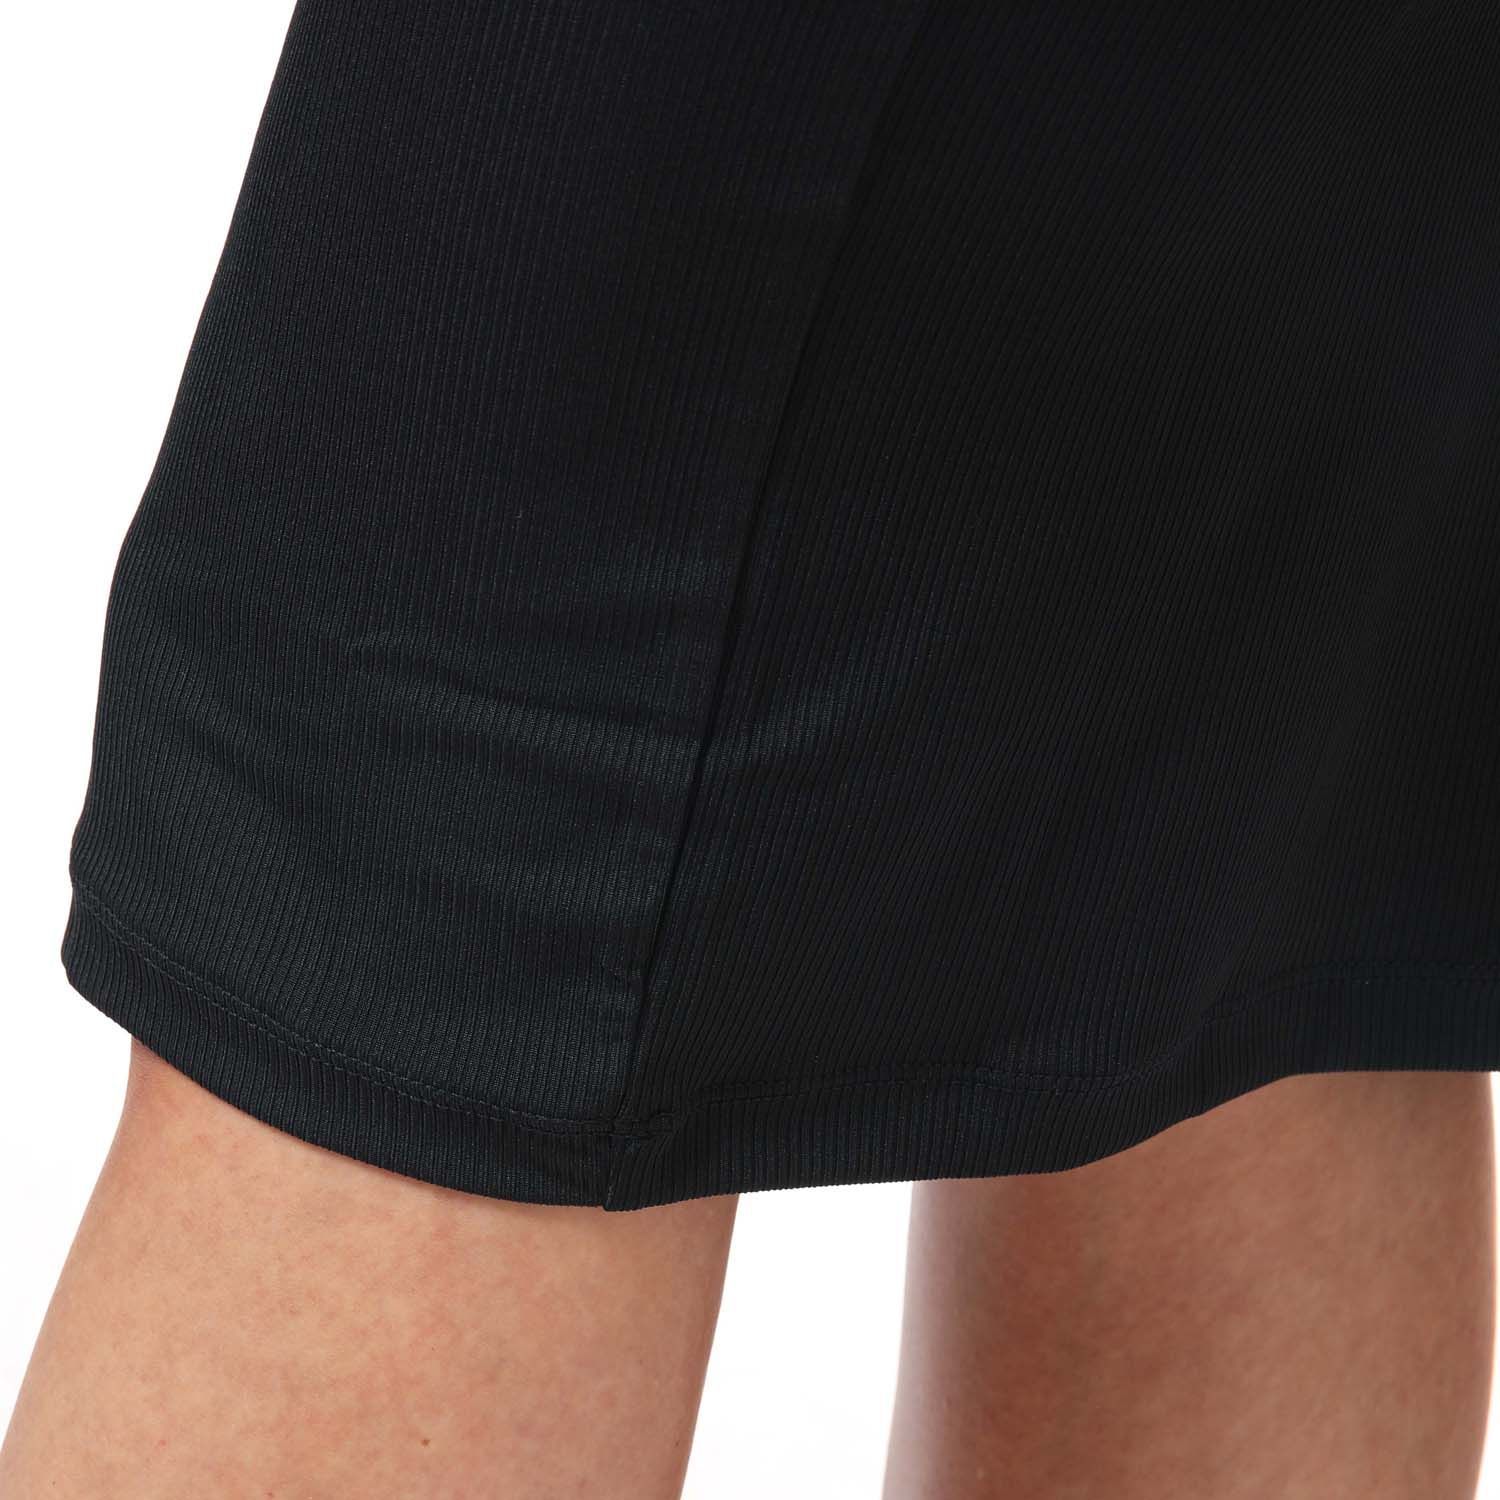 Womens Vero Moda Jill Jersey Tube Skirt in black.- High elasticated waist.- Pull-on style.- Stretchy stylish.- Slim fit.- 93% Polyester  7% Elastane. - Ref: 10262345